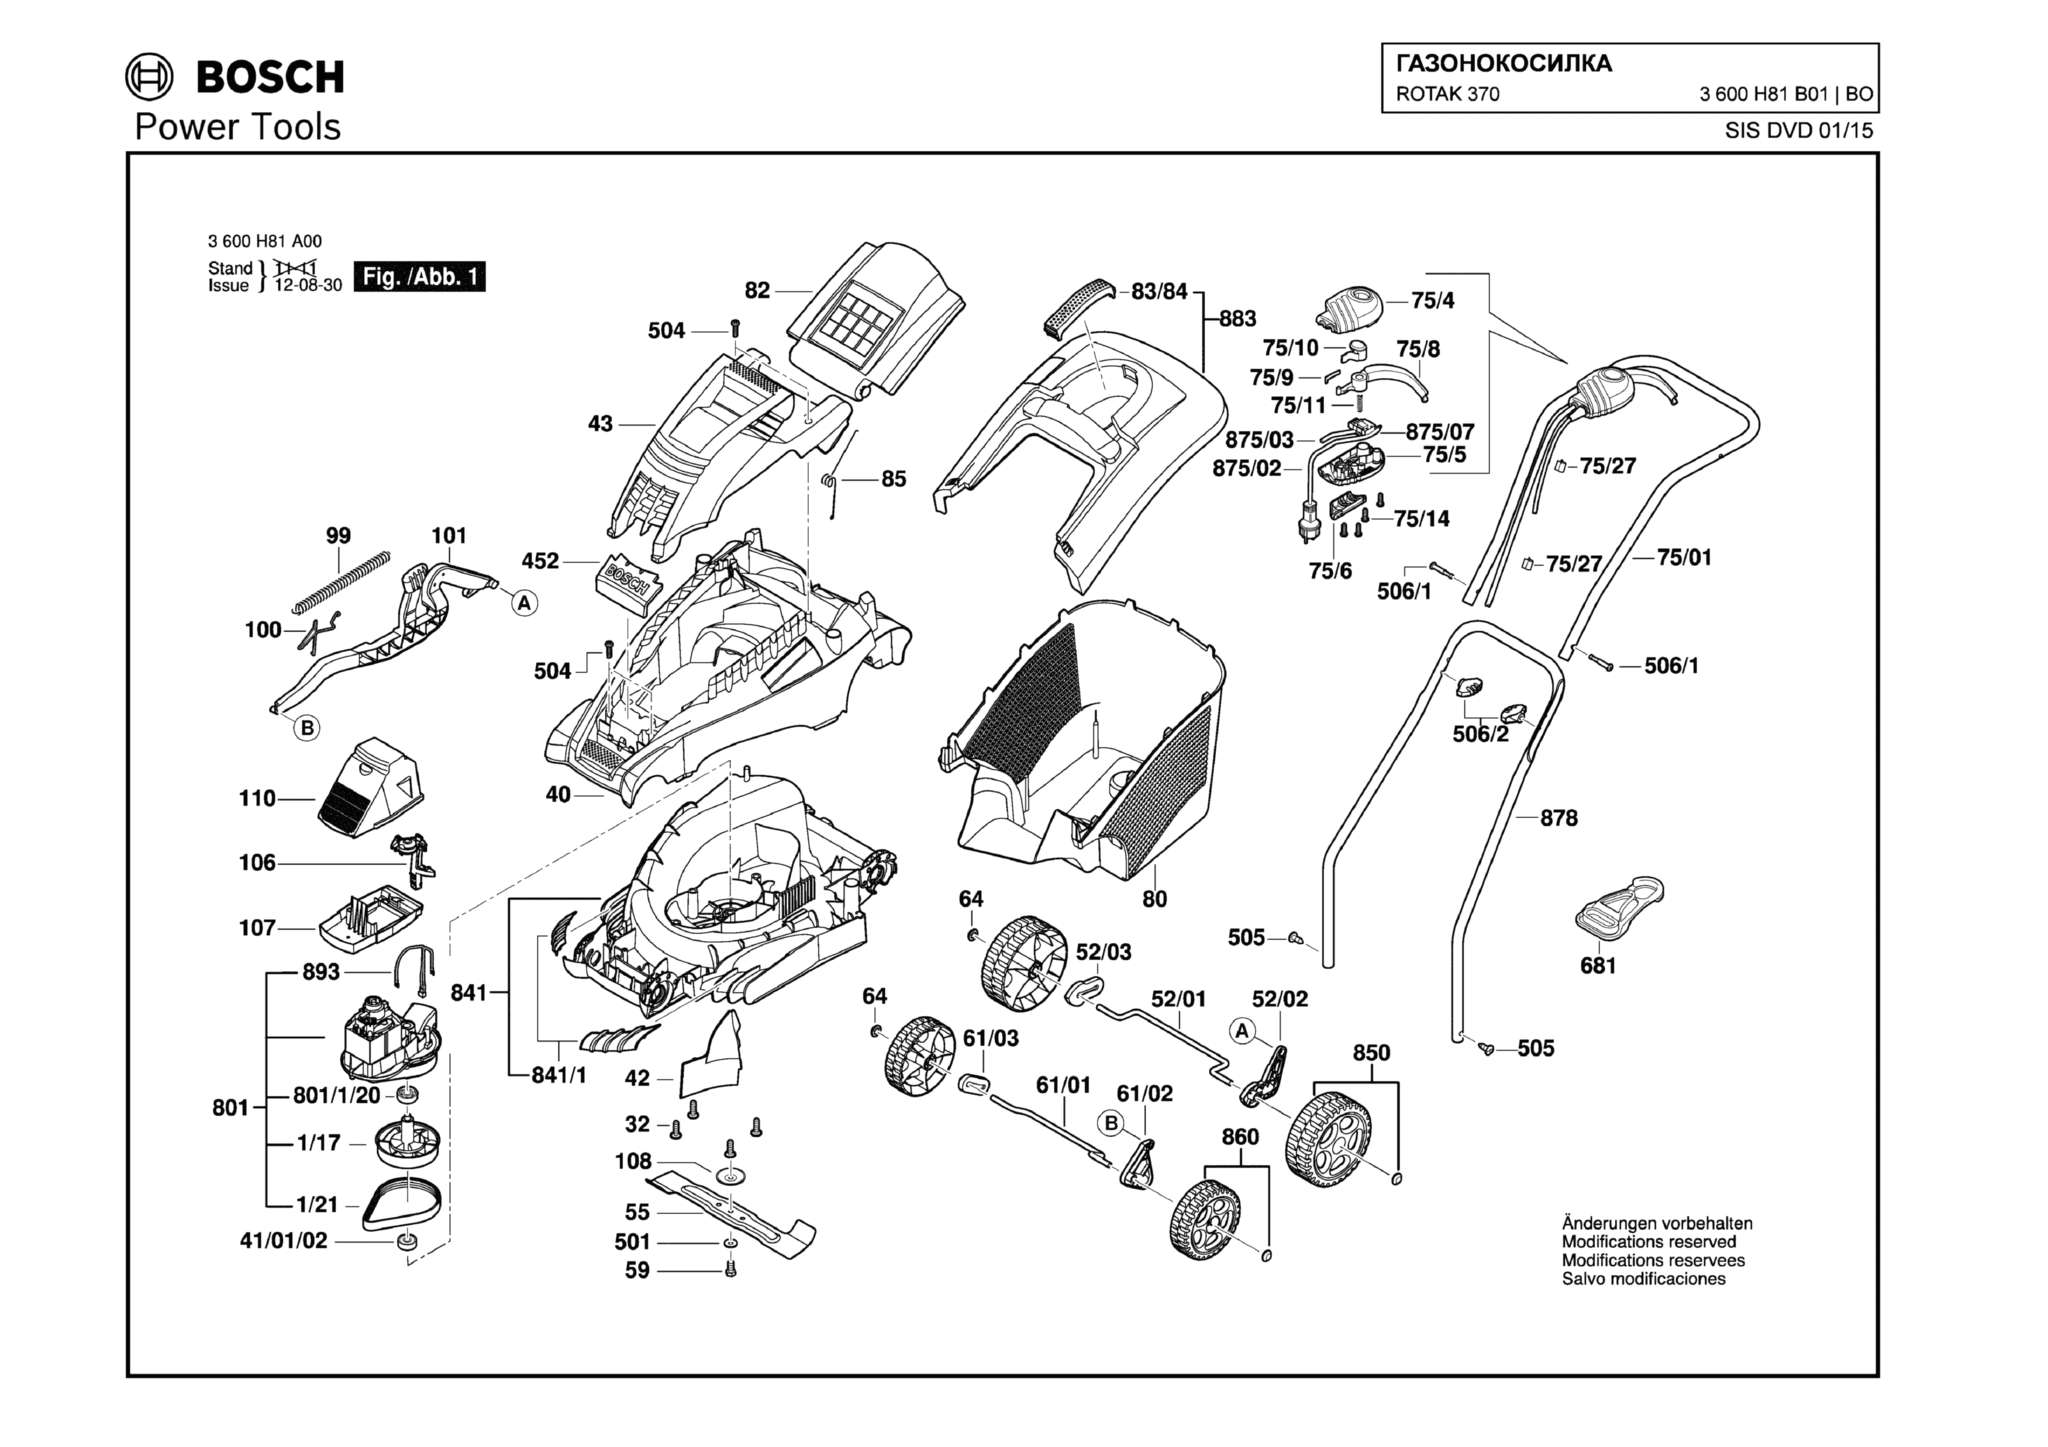 Запчасти, схема и деталировка Bosch ROTAK 370 (ТИП 3600H81B01)